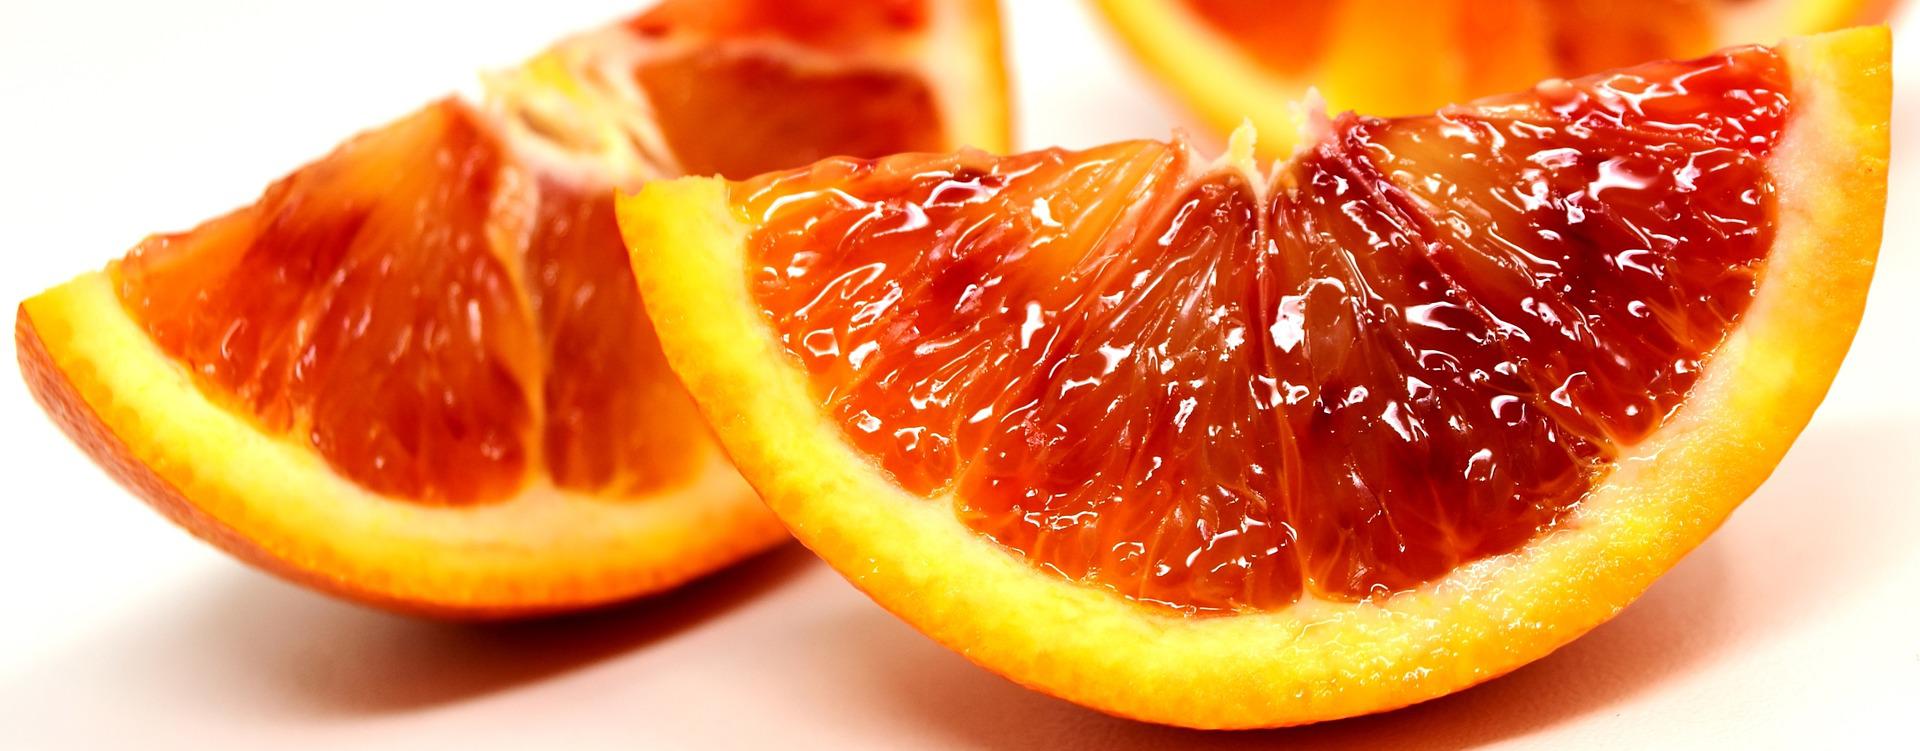 6 Moro Orange (Blood Orange) Benefits and Side Effects